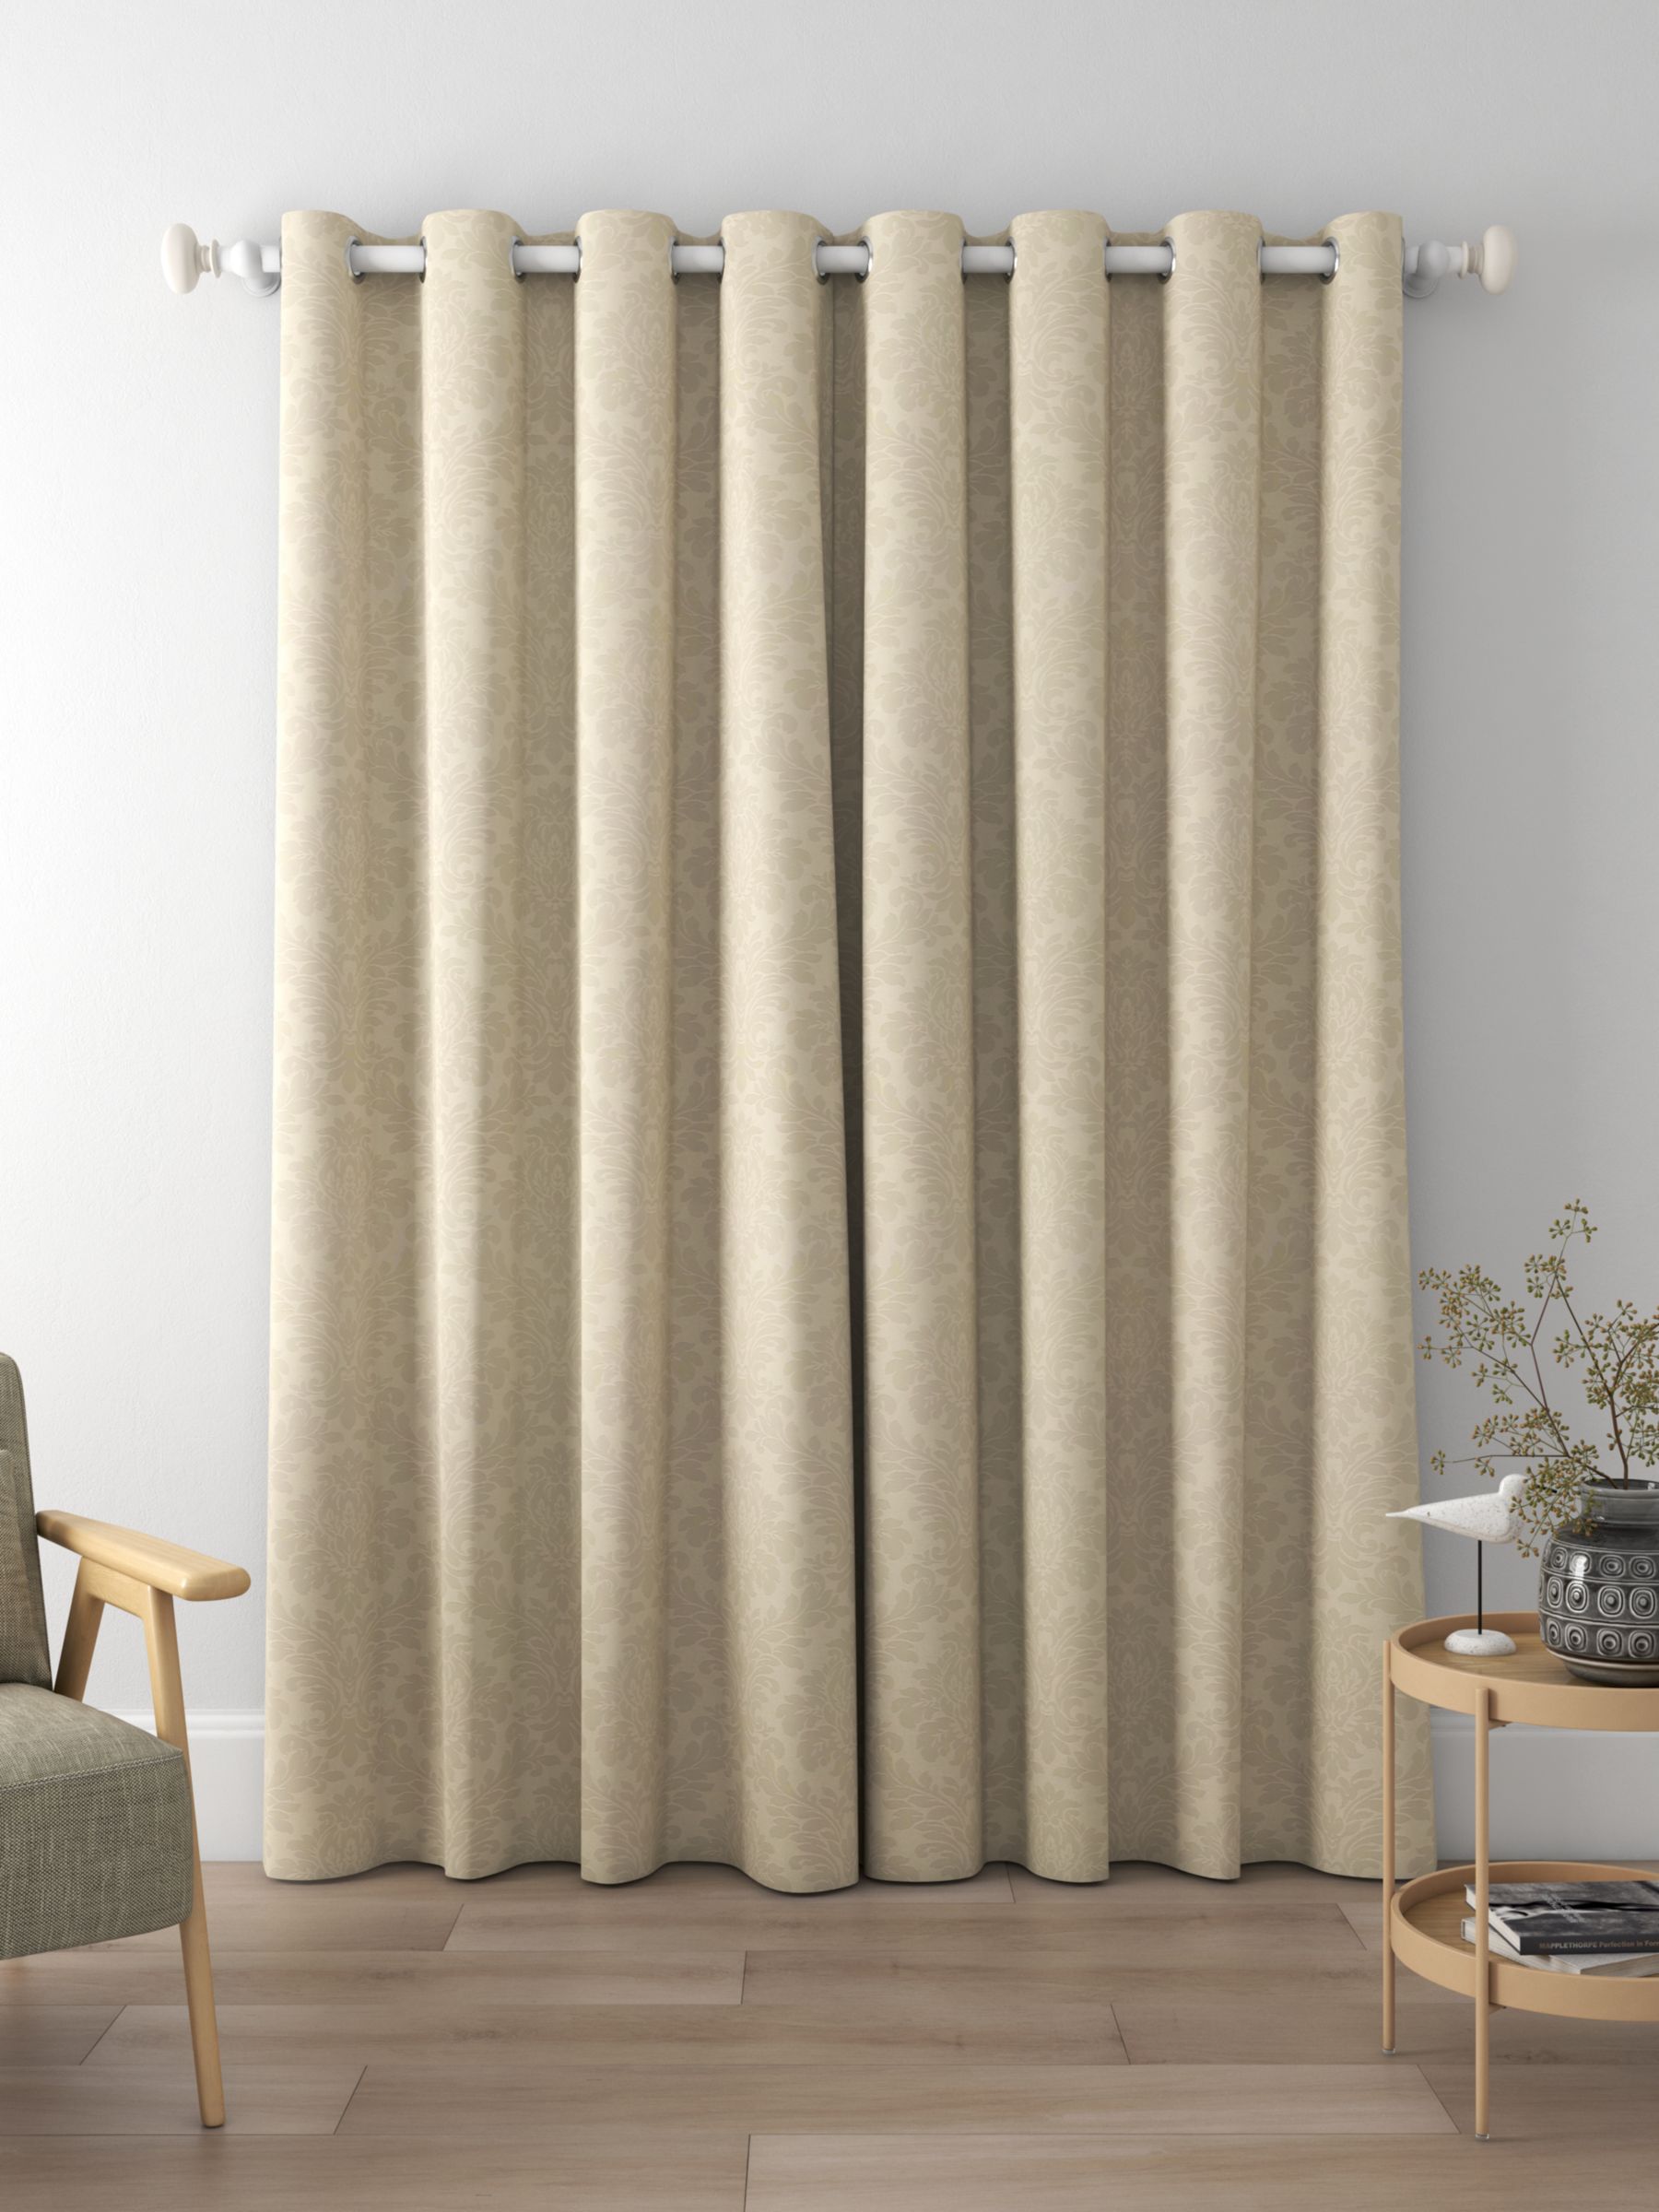 Sanderson Lymington Damask Made to Measure Curtains, Pale Linen